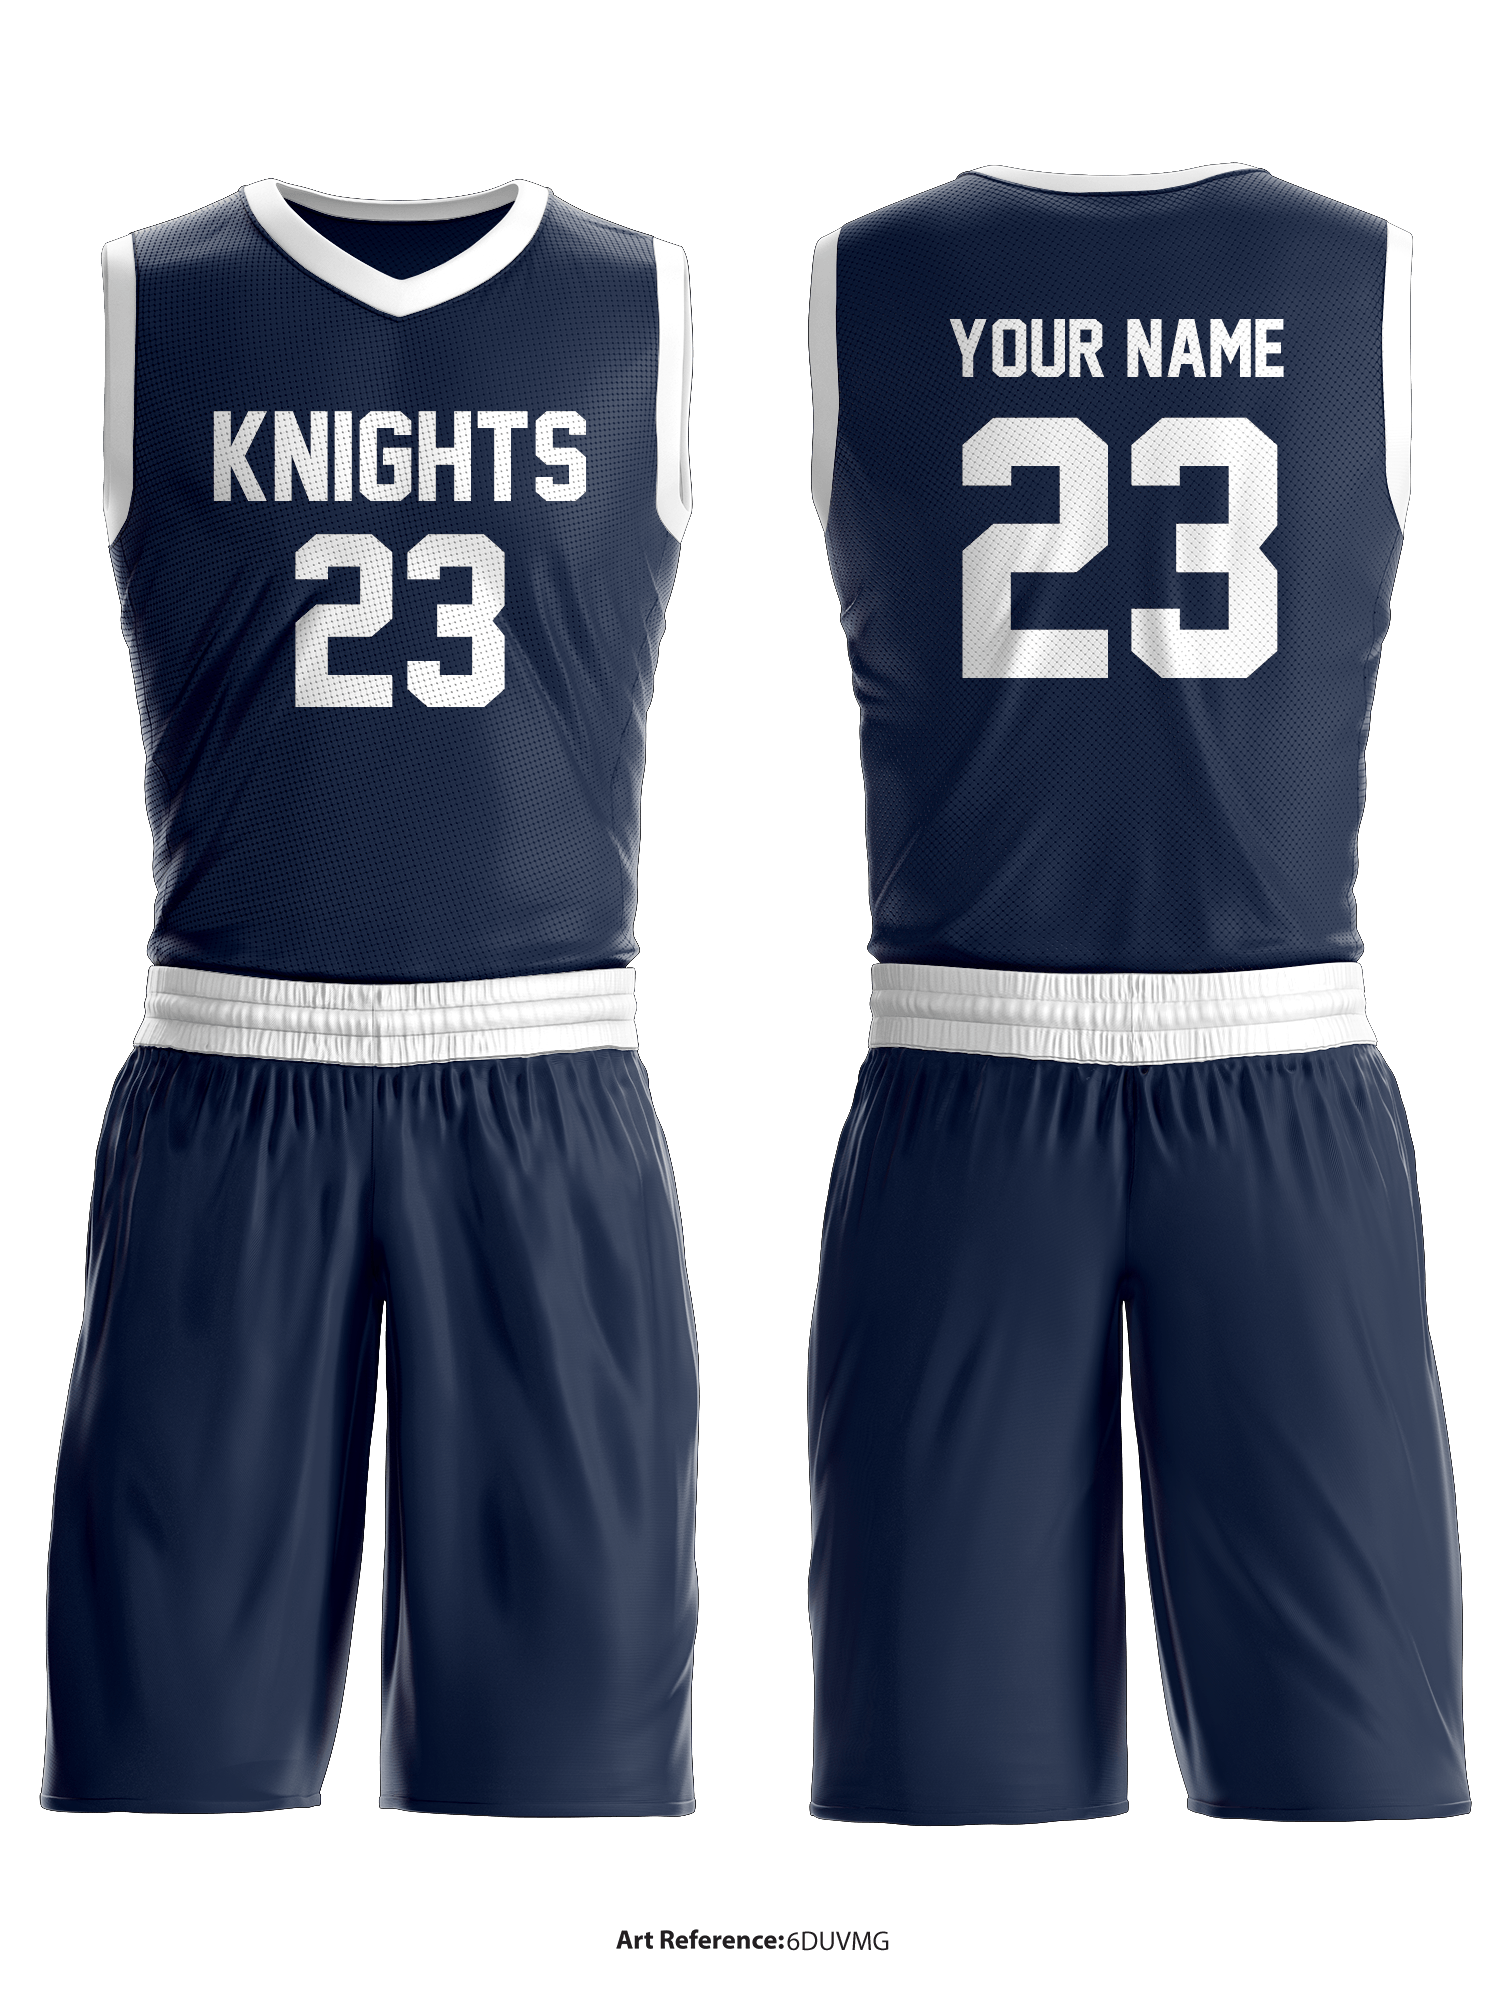 Knights Store 3 Basketball Uniform 